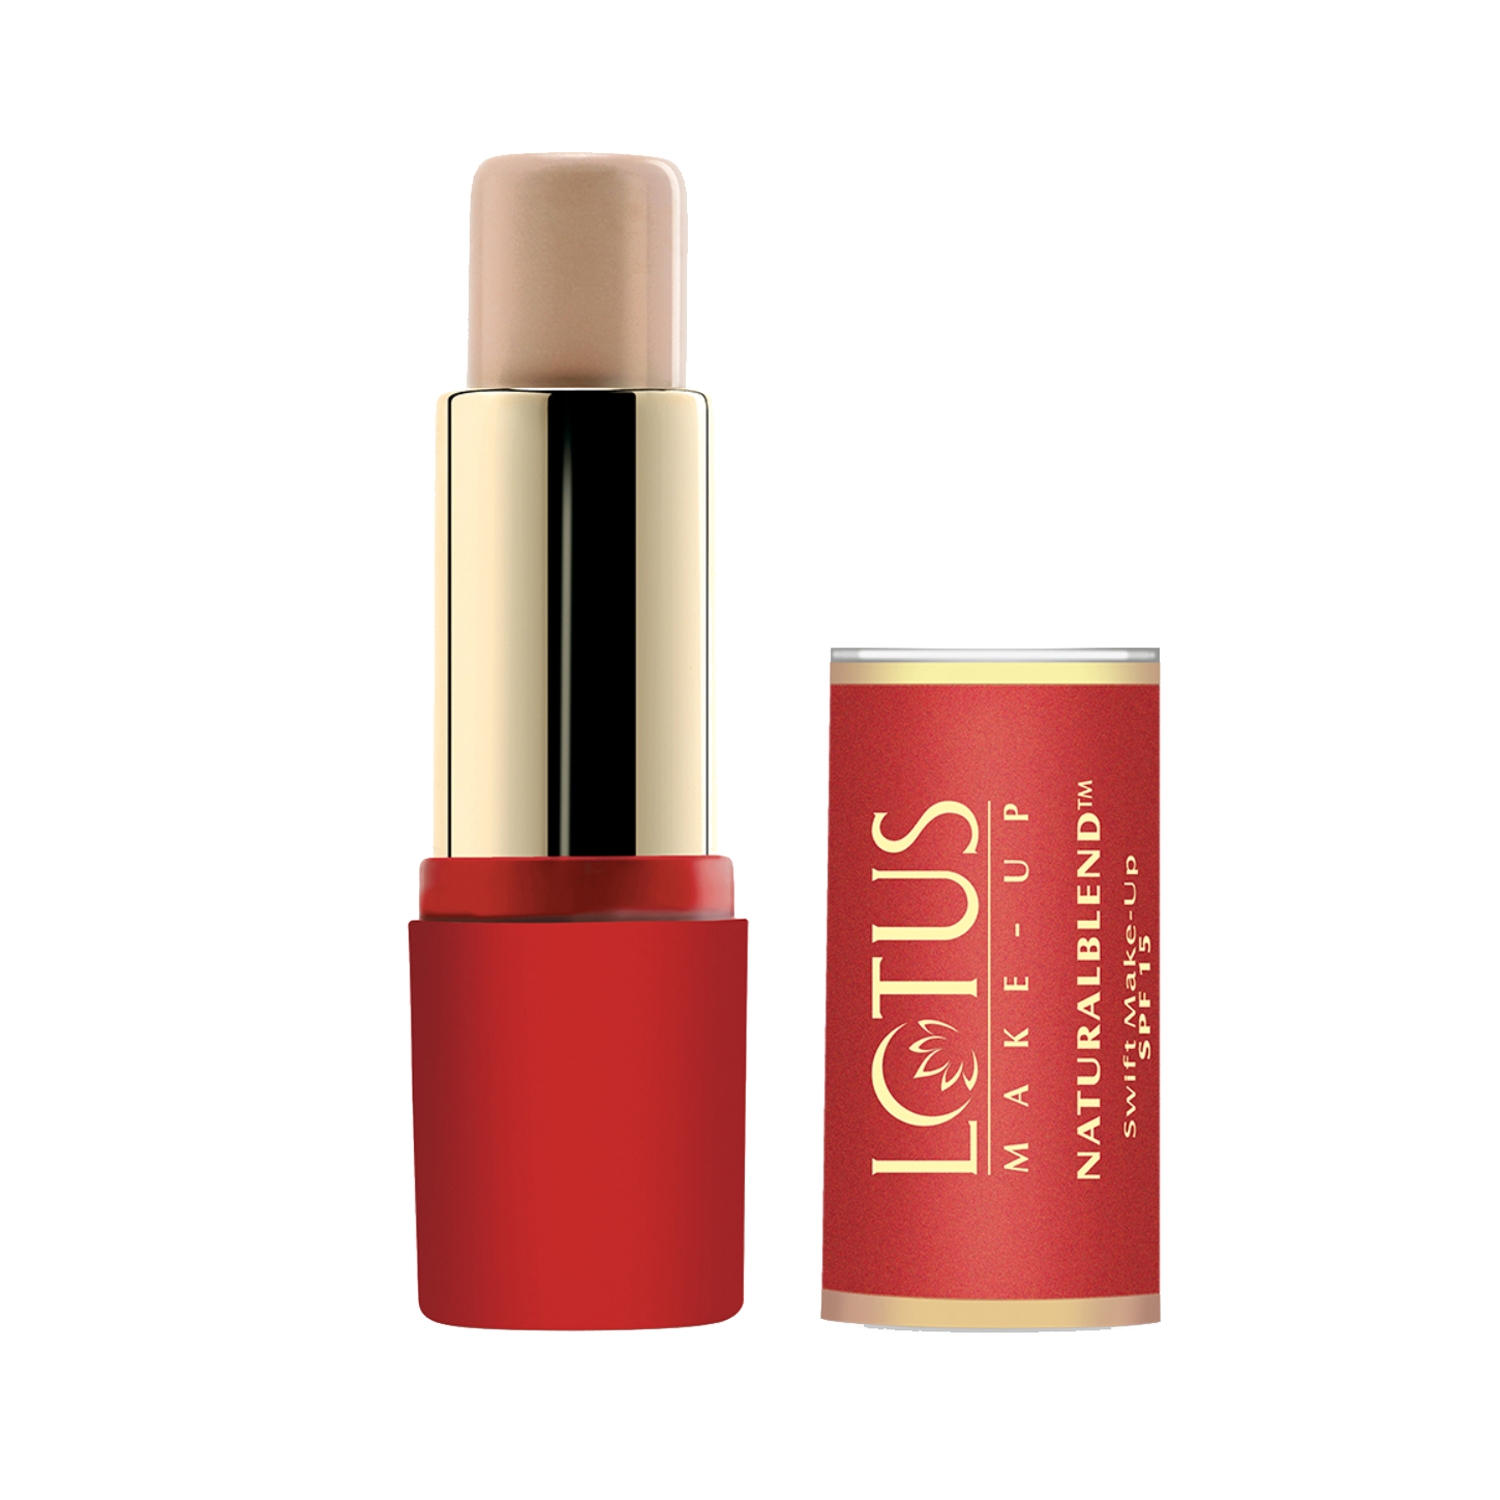 Lotus | Lotus Makeup Natural Blend Swift Makeup Stick SPF 15 - 730 Creamy Peach (10g)